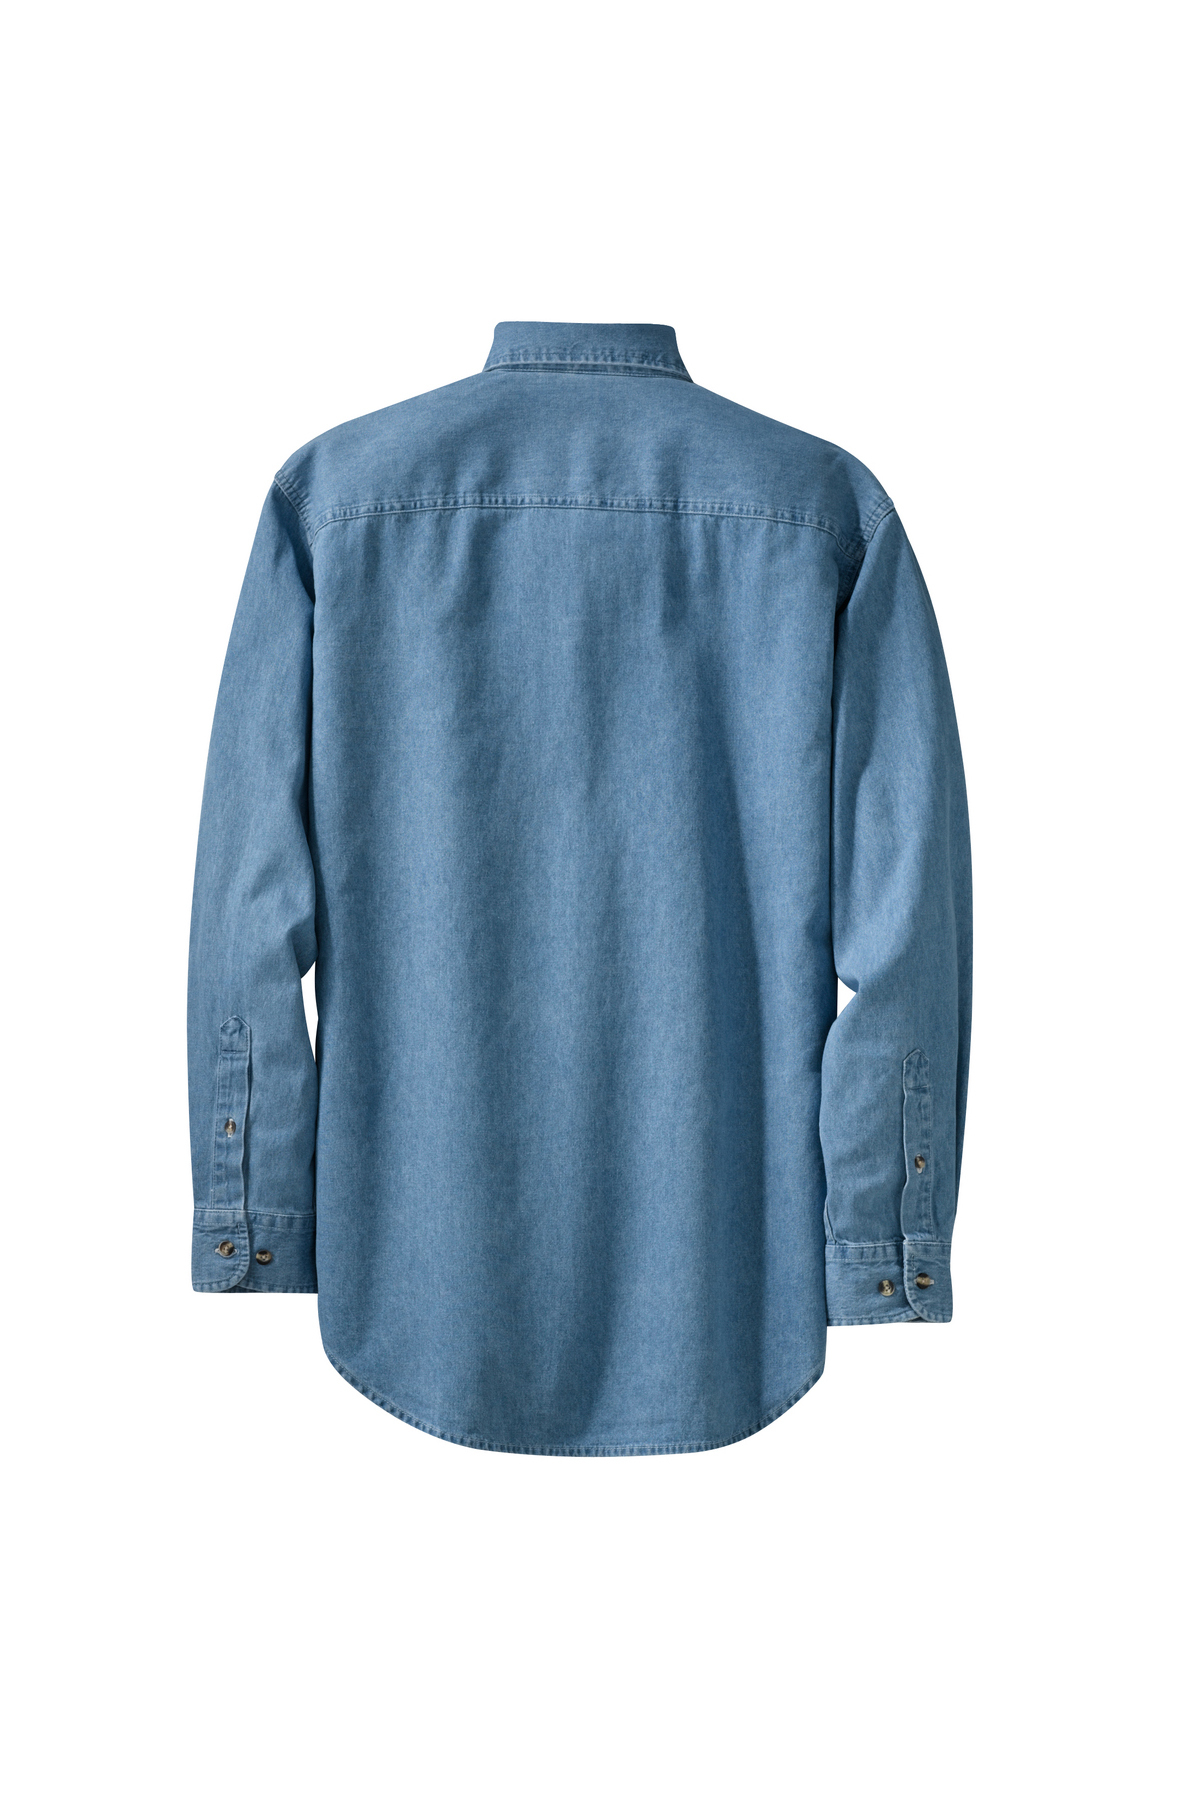 Port & Company - Long Sleeve Value Denim Shirt | Product | Port 